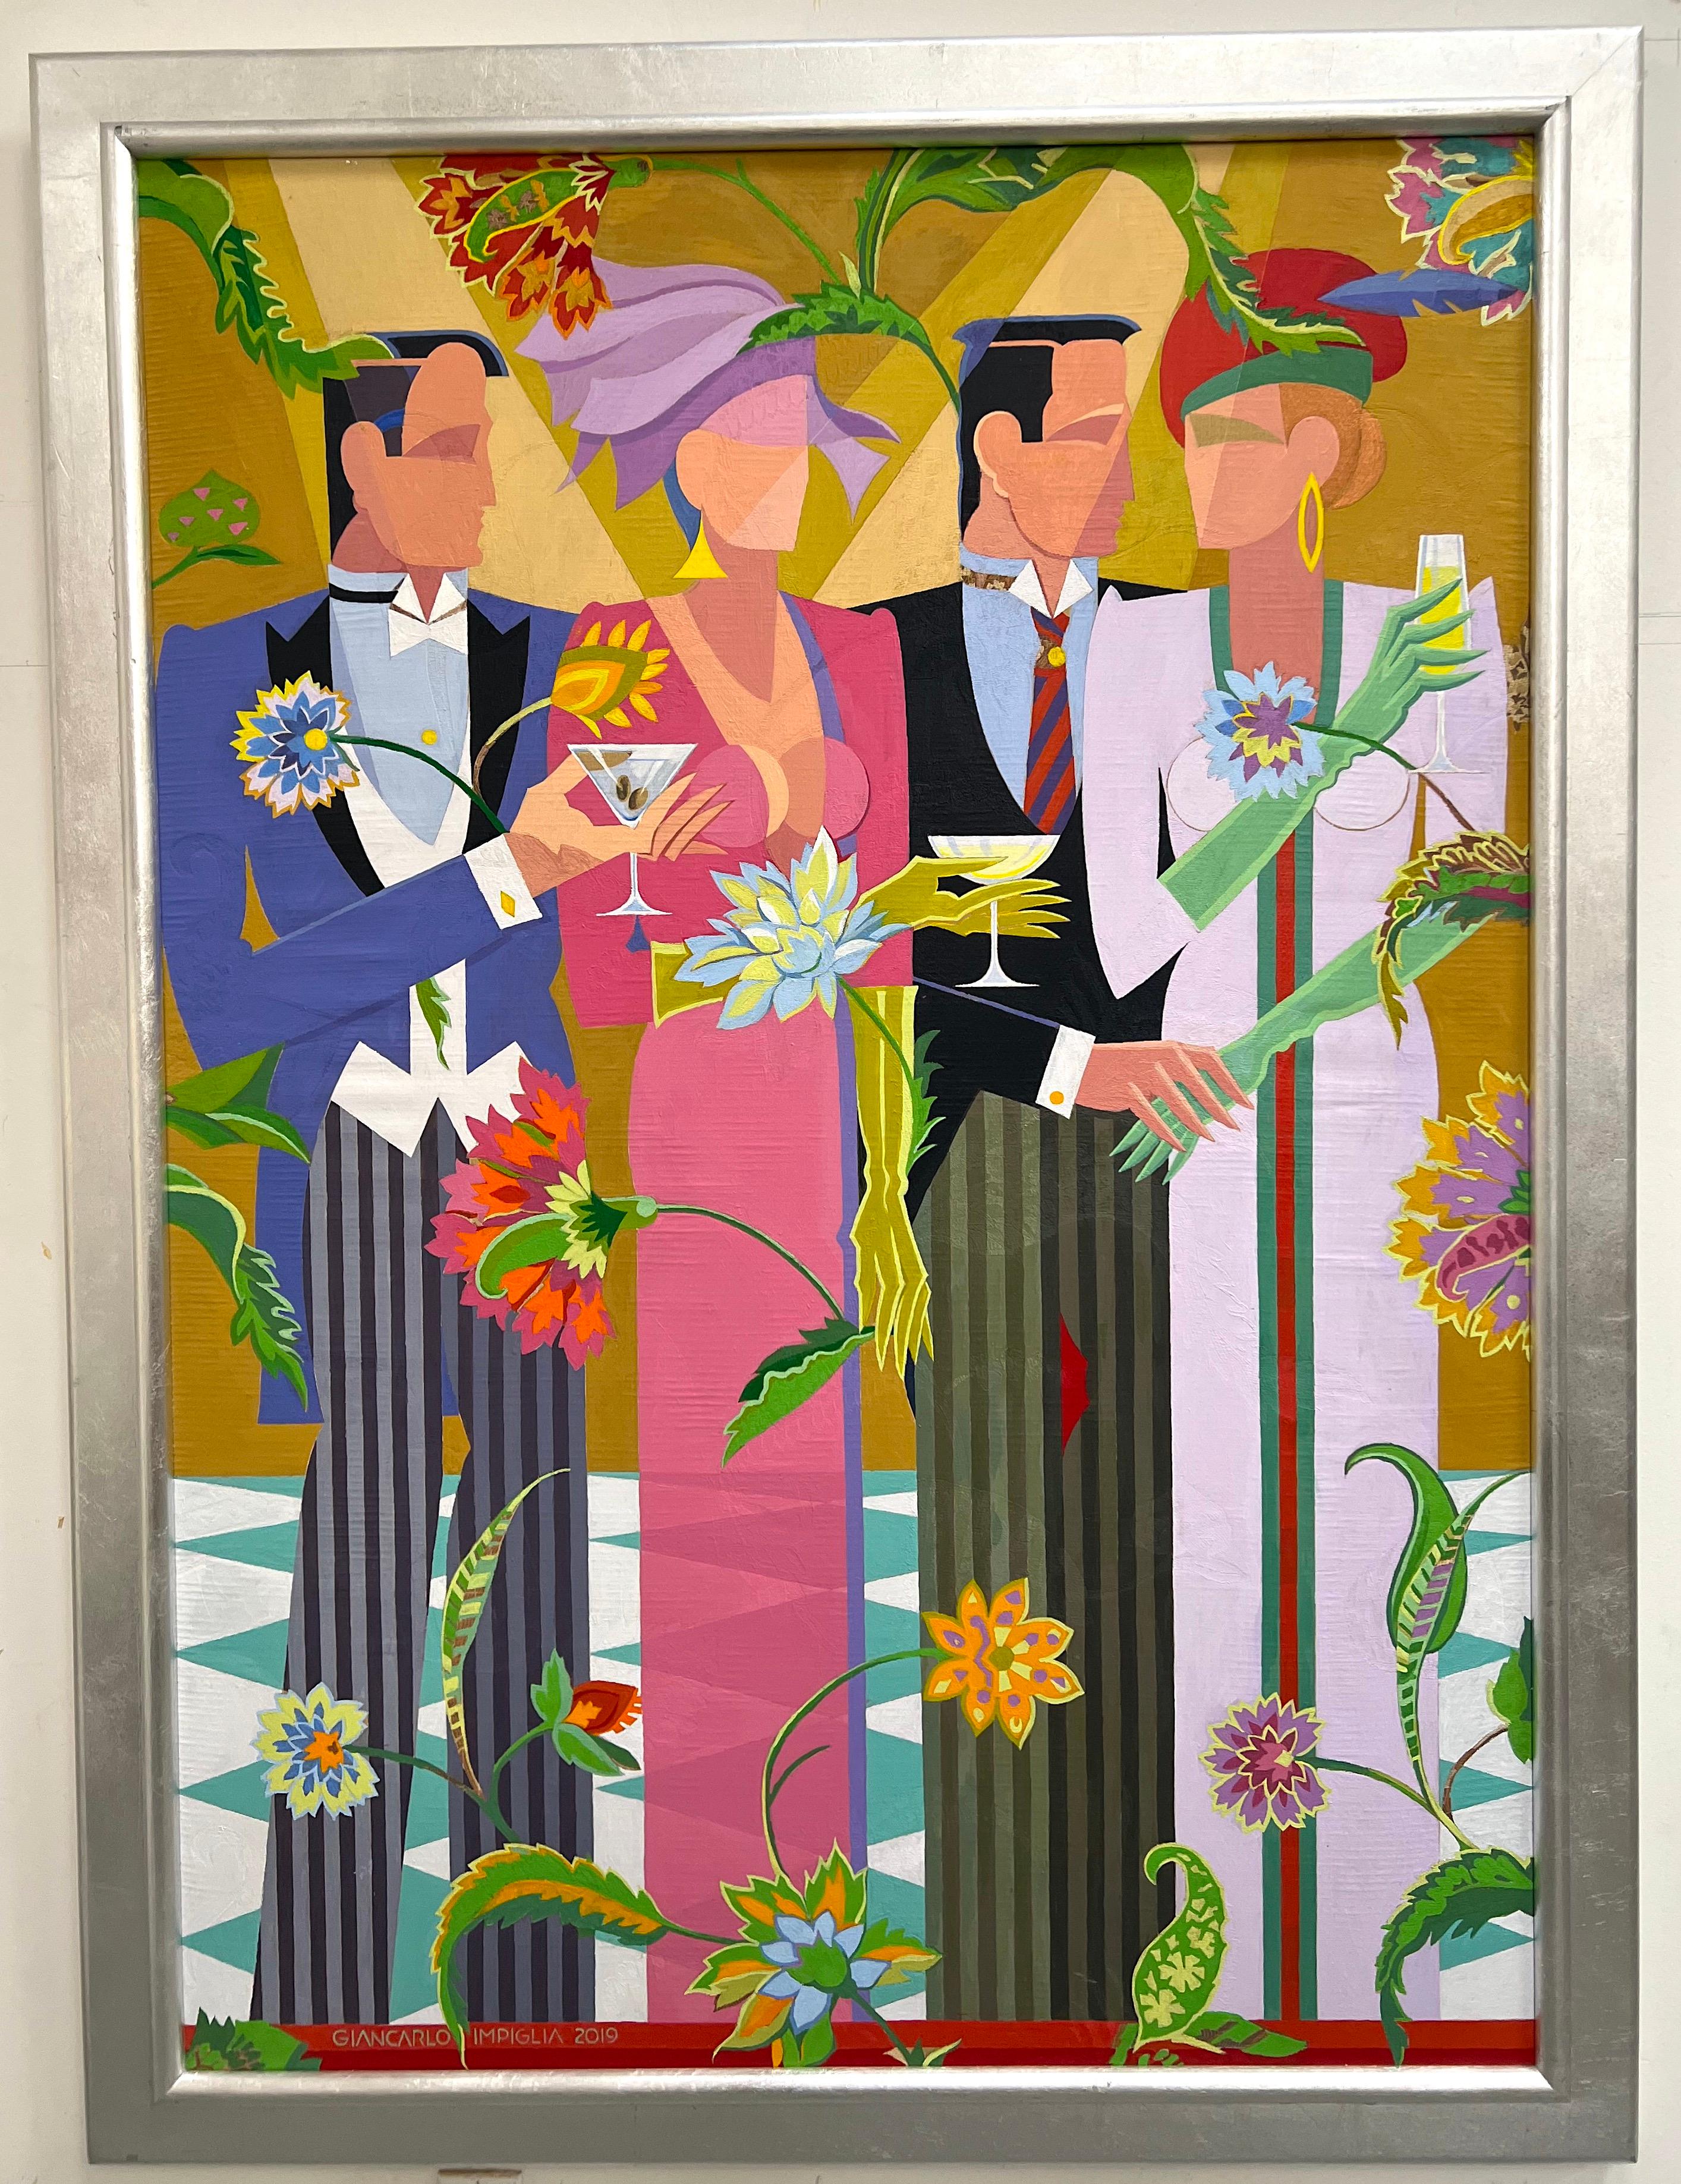 Life in Blossom (La vie en fleur) - Painting de Giancarlo Impiglia